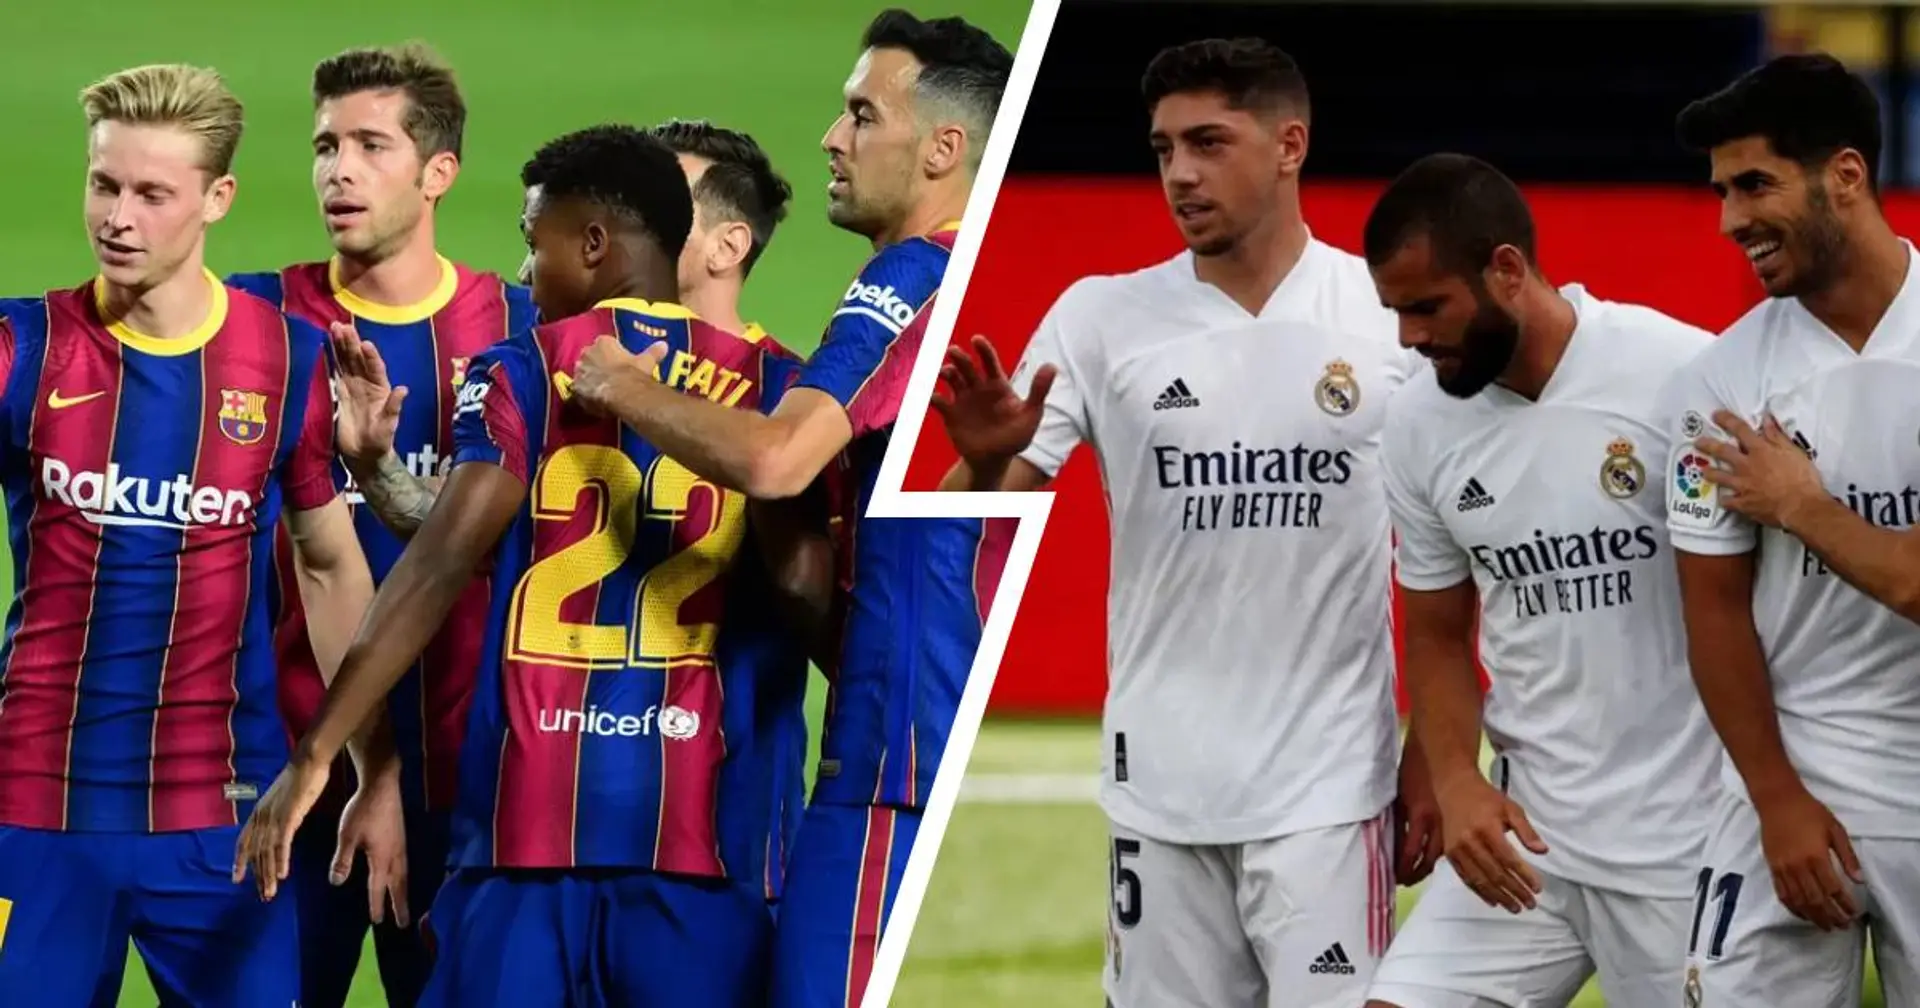 Barca vs Real Madrid: line-ups, score predictions, head-to-head record & more — preview